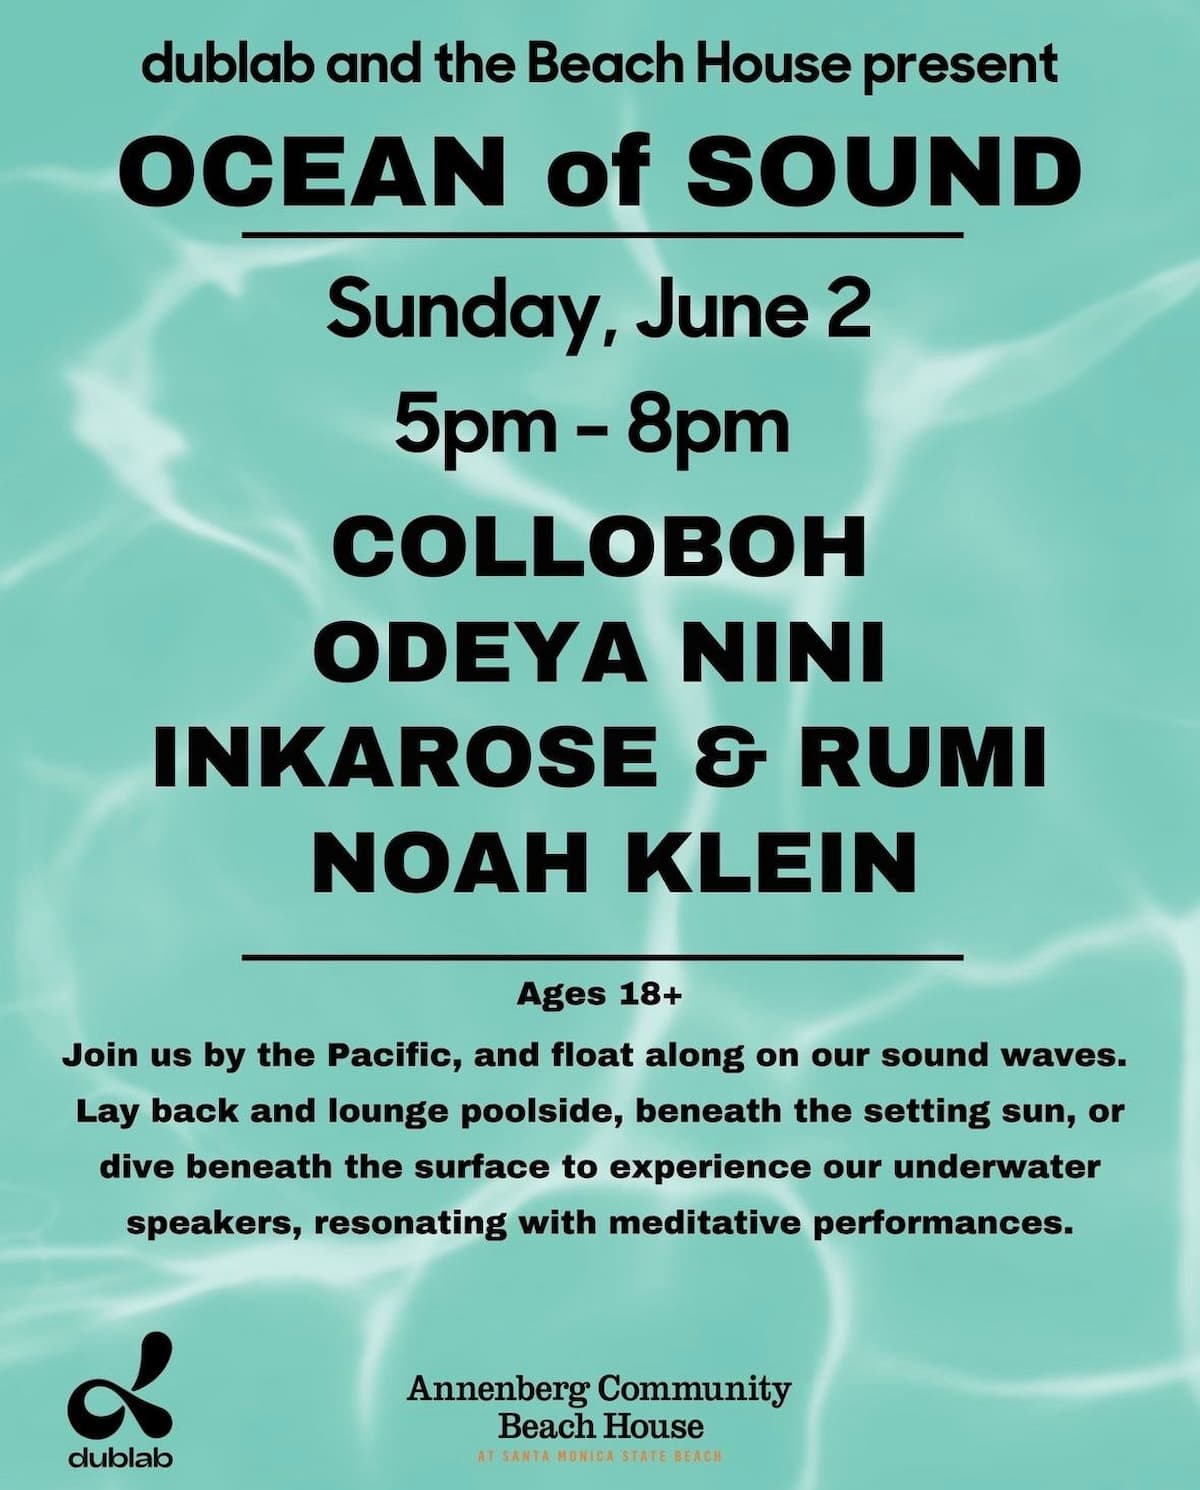 dublab presents Ocean of Sound